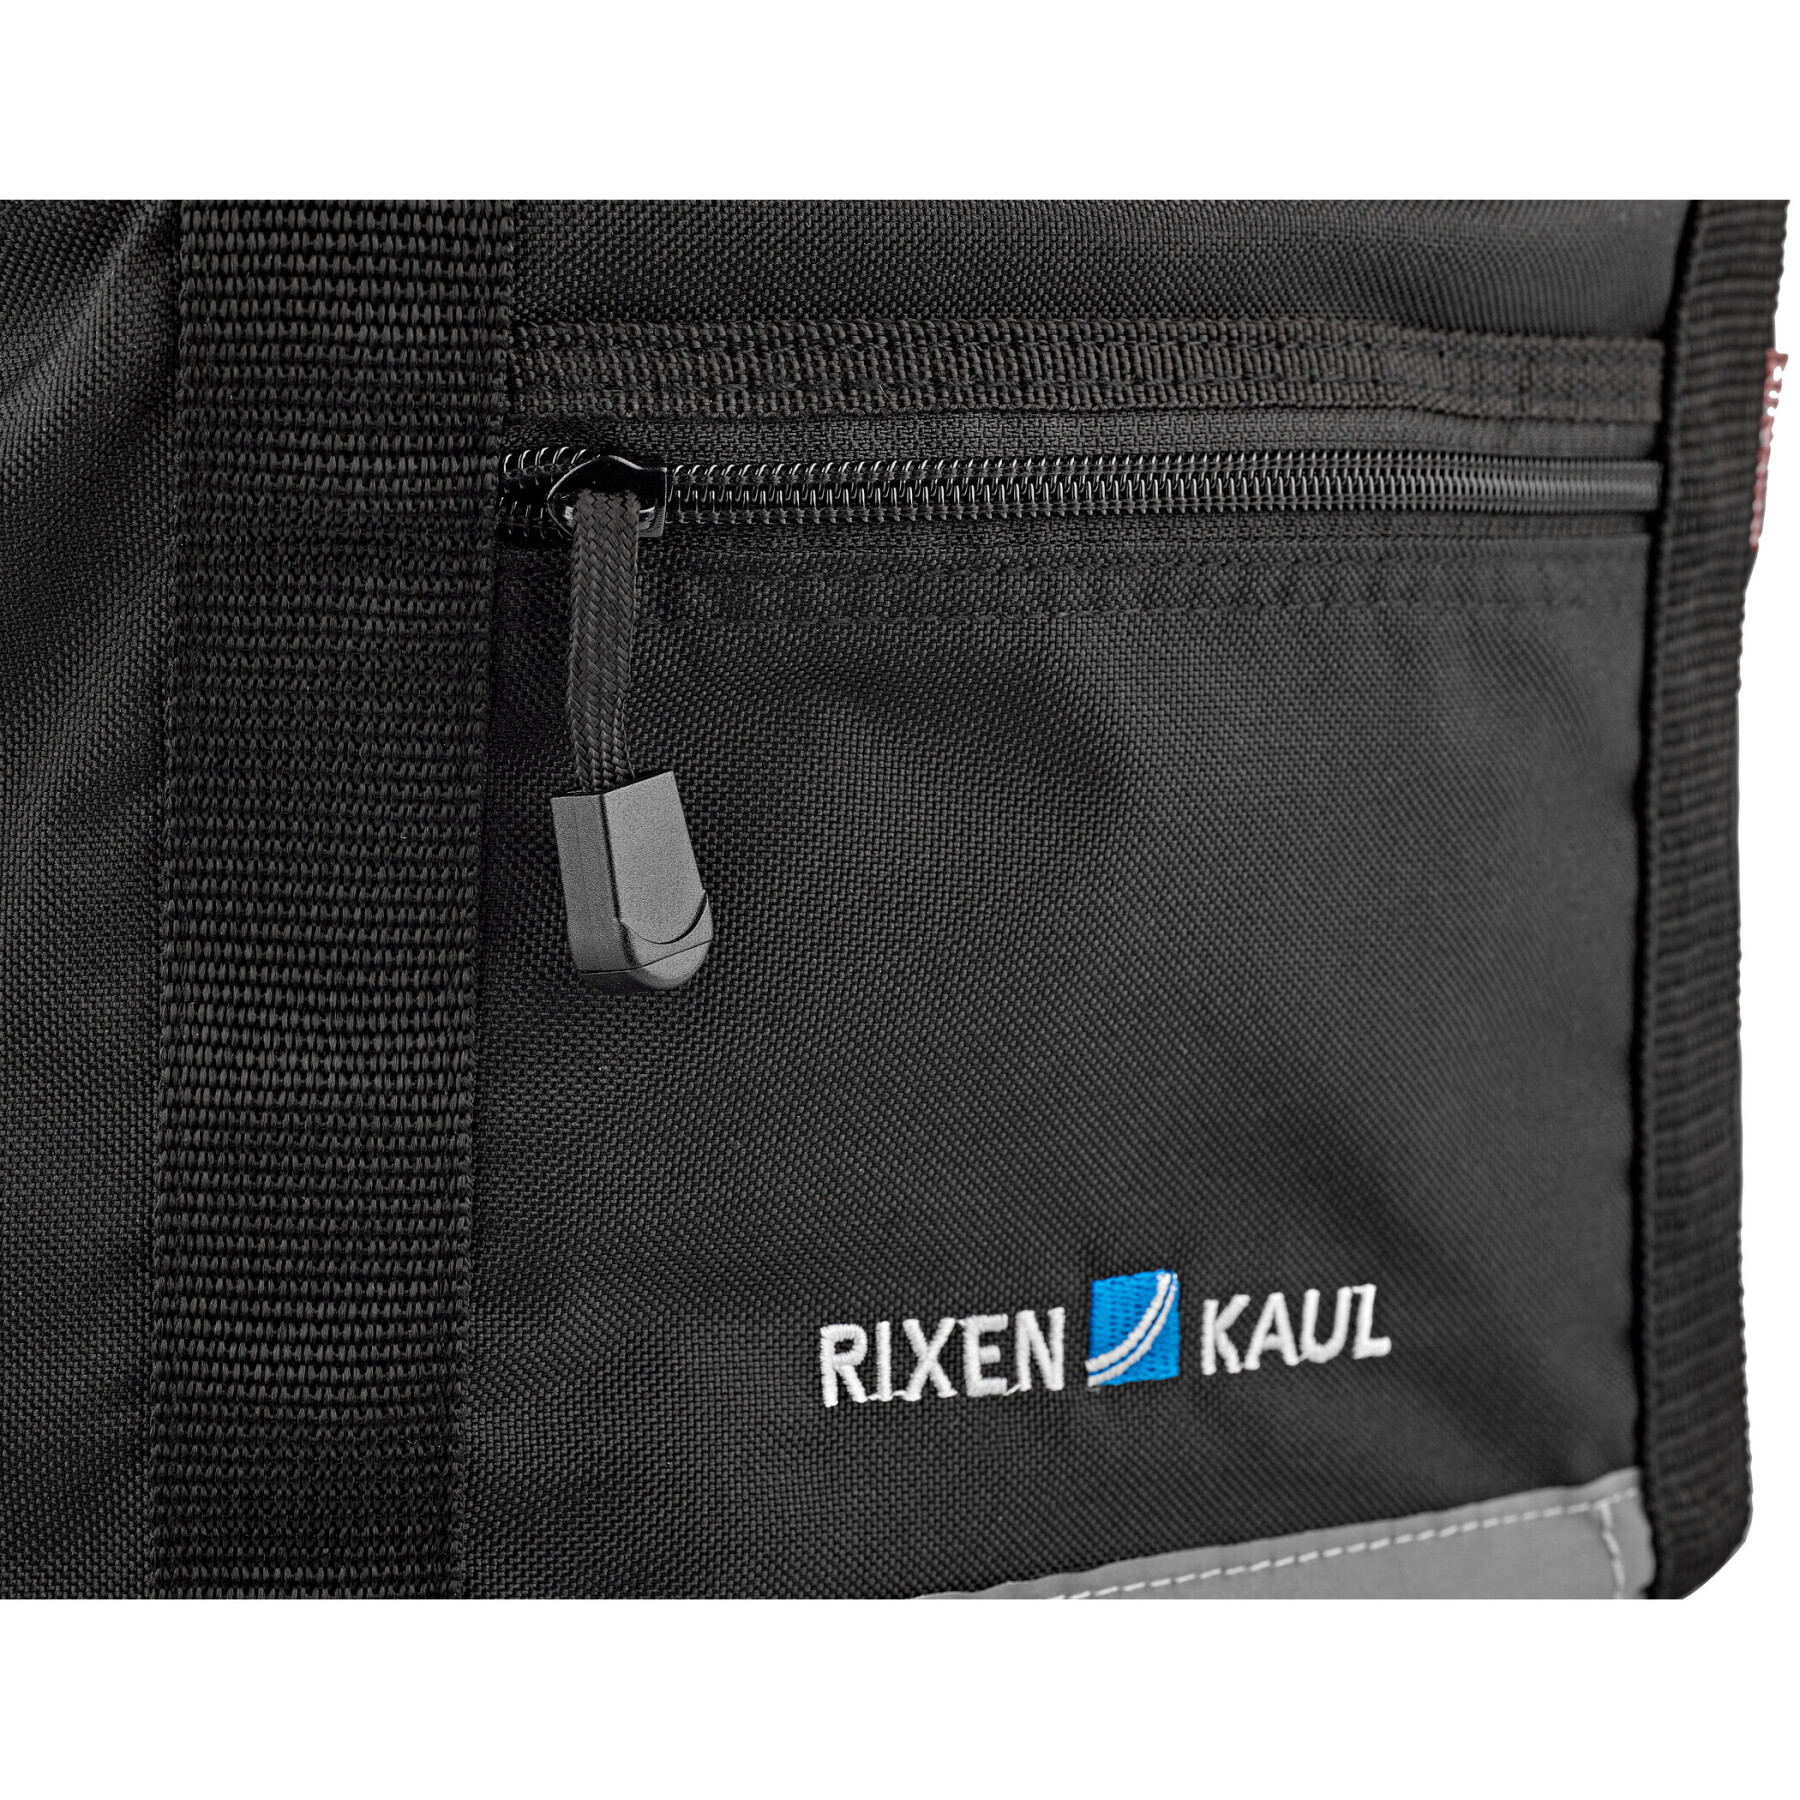 Handlebar bag for bike racing comfort mini for attachment Rixen & Kaul Klickfix